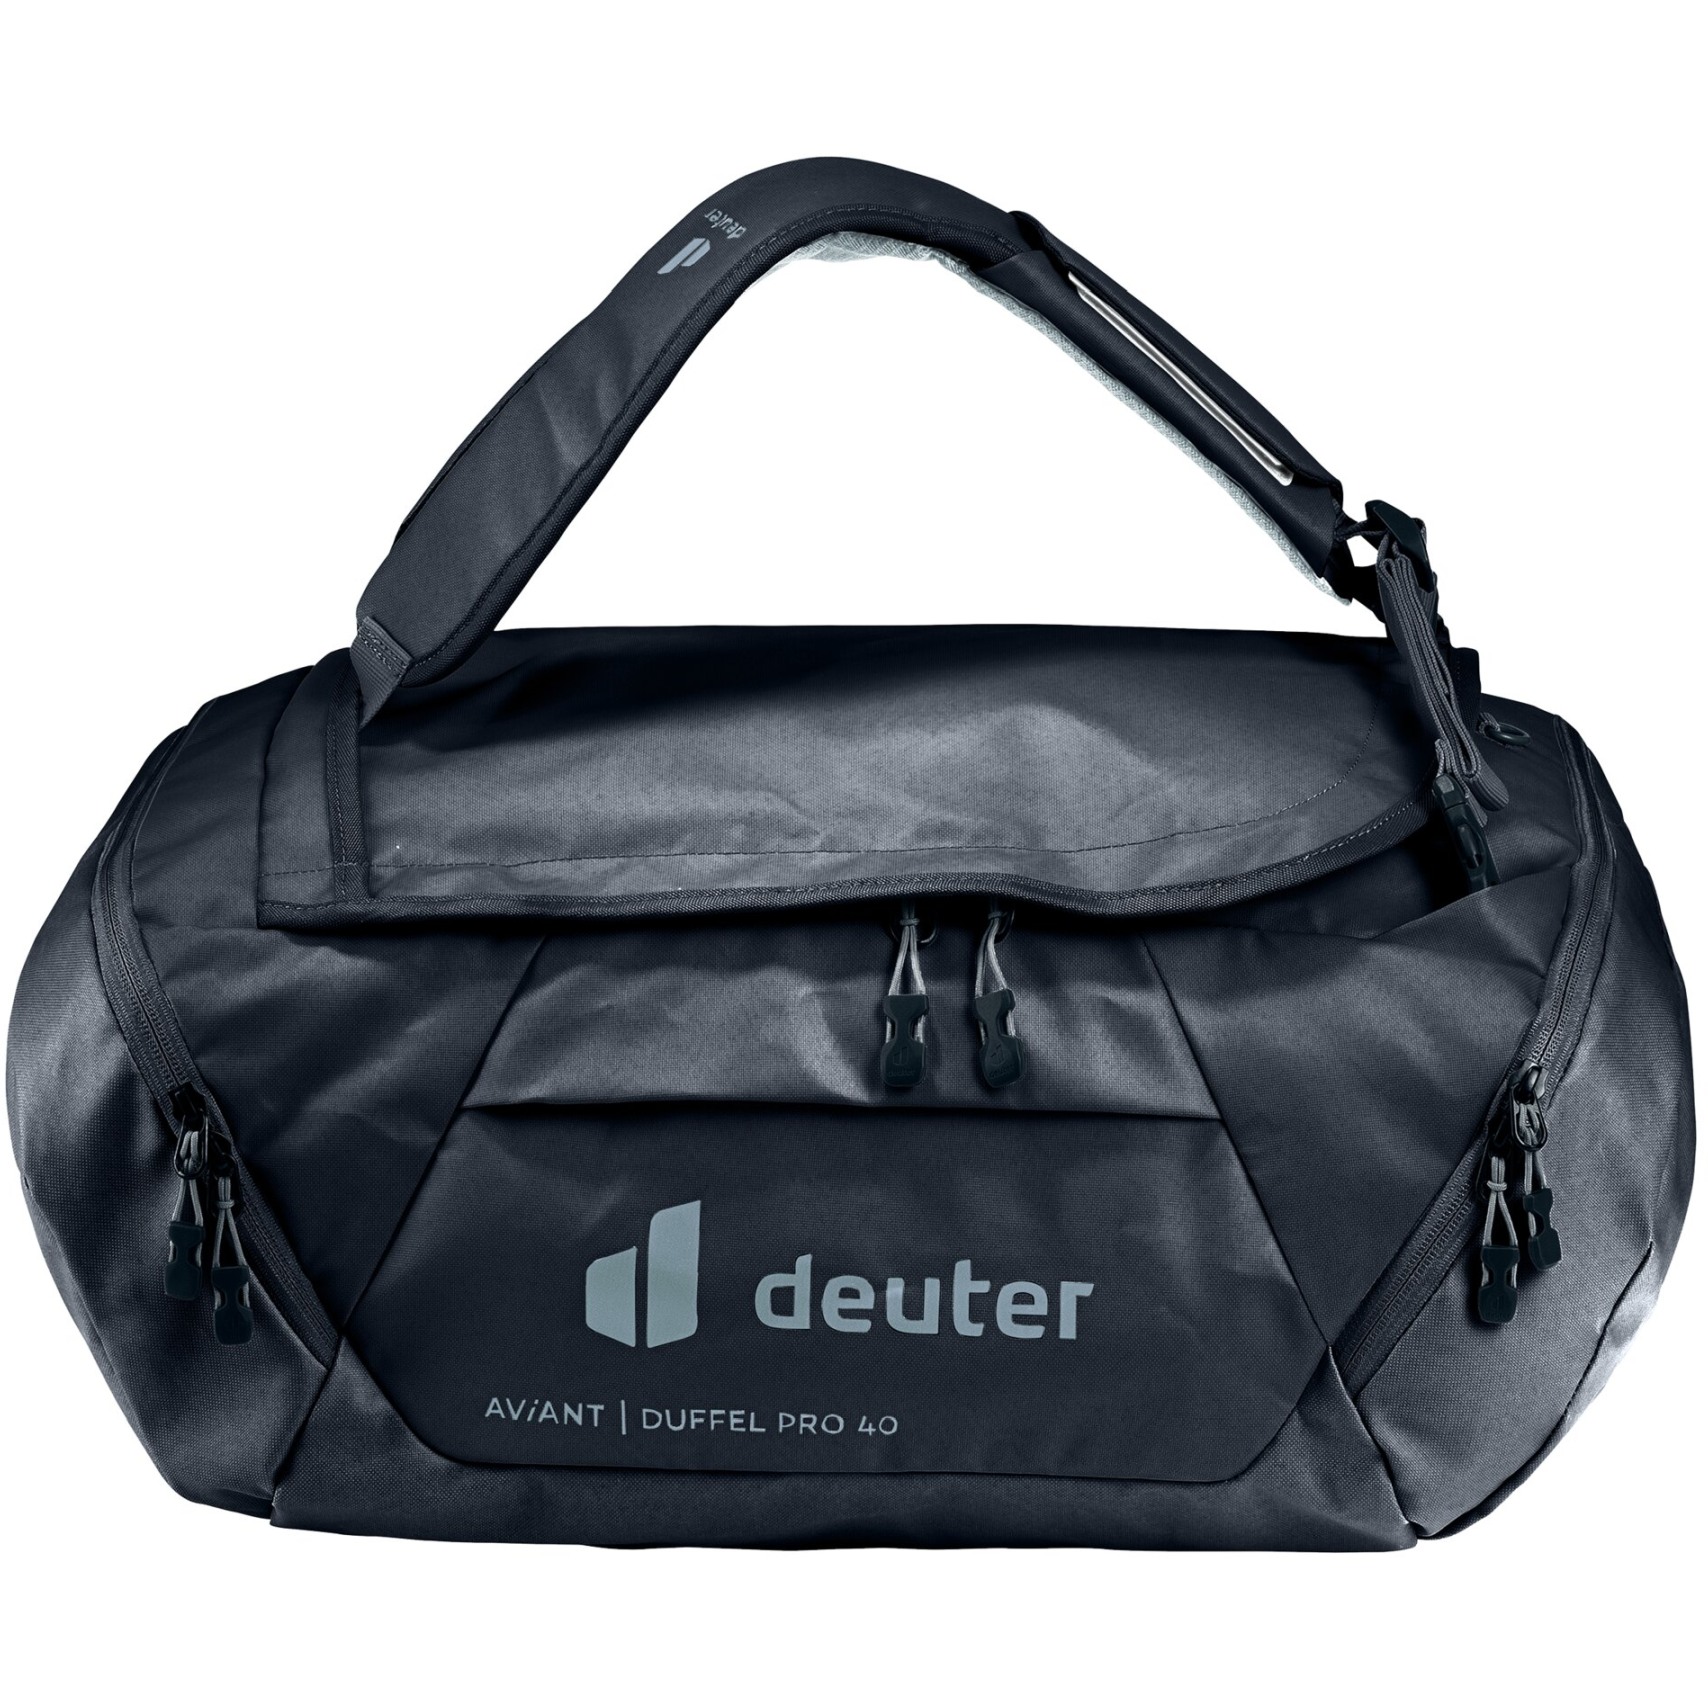 Deuter AViANT Duffel Pro 40 Reisetasche - schwarz | BIKE24